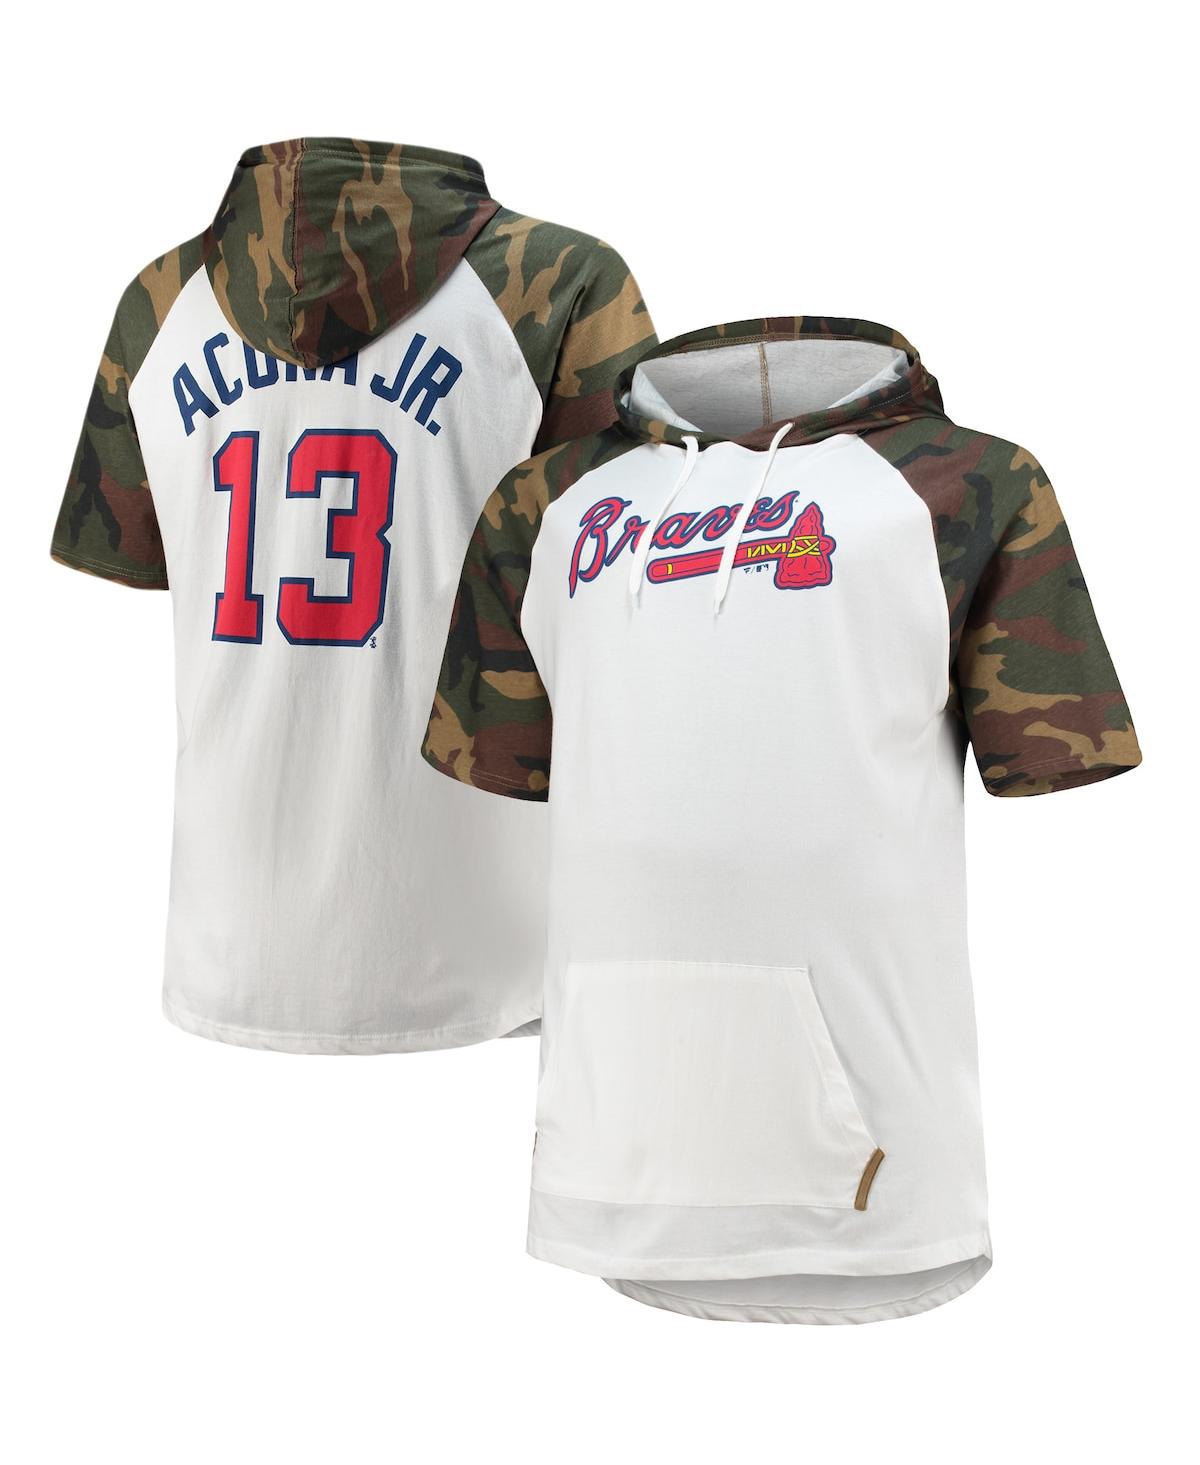 Men's Ronald Acuna Jr. White and Camo Atlanta Braves Player Big and Tall Raglan Hoodie T-shirt - White, Camo